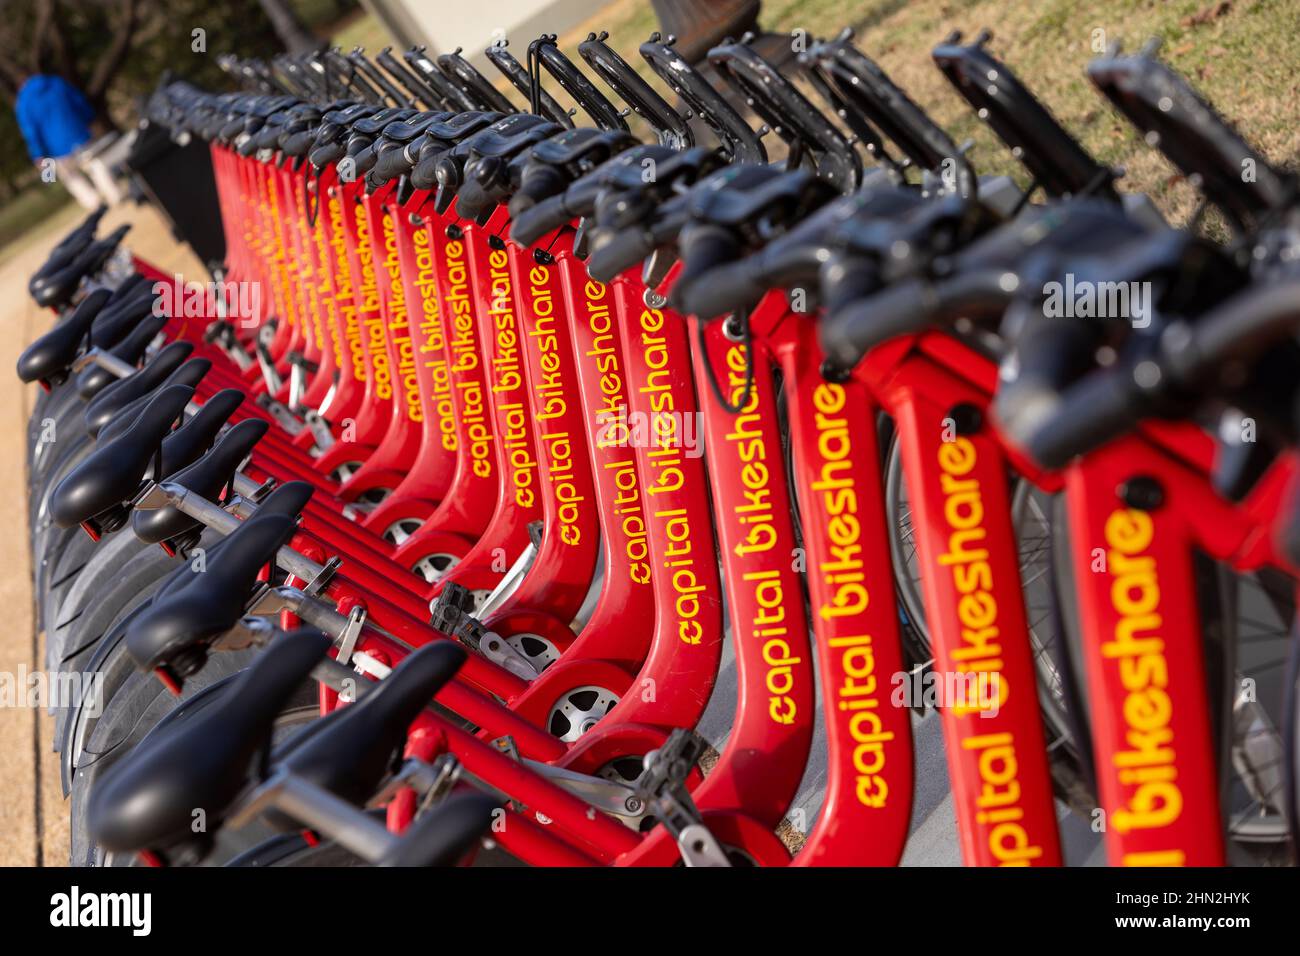 WASHINGTON, DC, USA - Storage rack of Capital Bikeshare bicycles ready to rent. Stock Photo